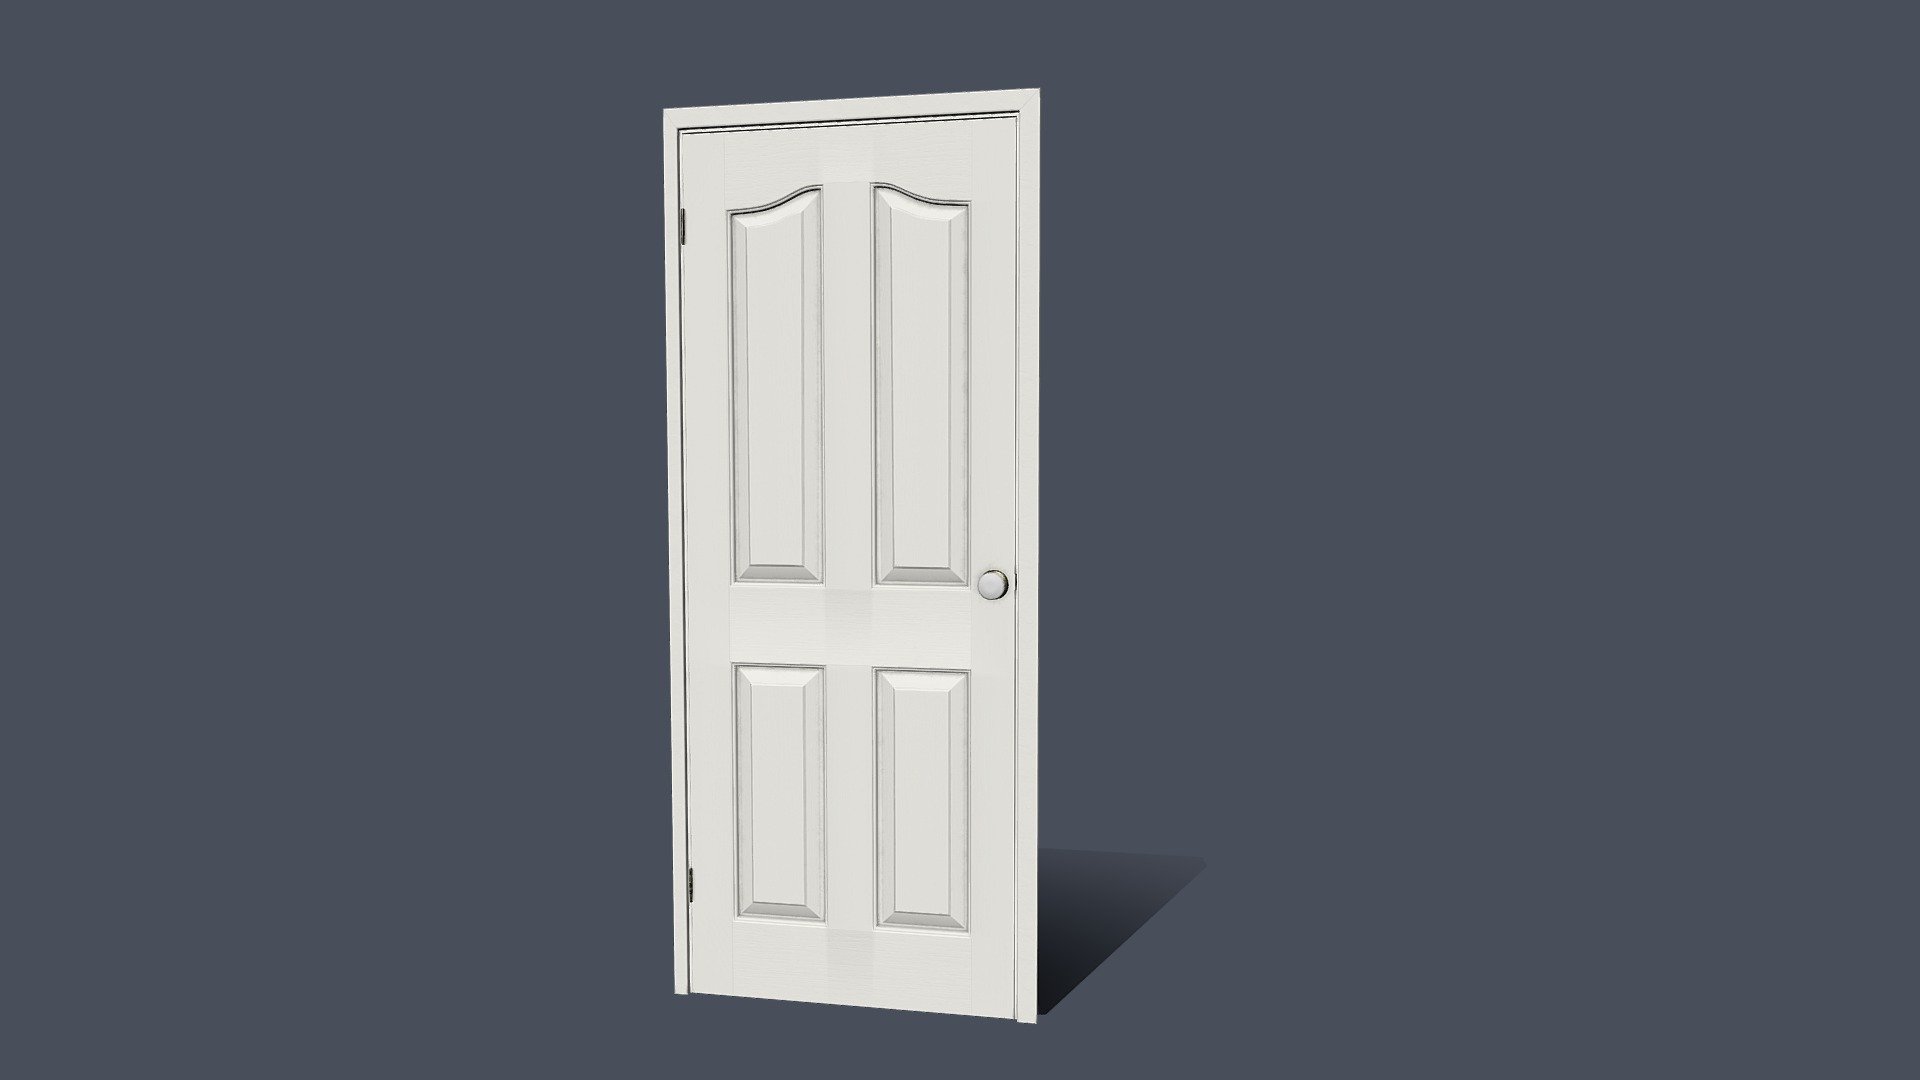 Door 001 and door frame for use in architecture scenes or projects

To scale in CM

Door x5 textures 4096 x 4096 pixels   AO, DIFFUSE, METAL, ROUGHNESS, NORMAL

DoorFrame x4 textures 4096 x 4096 pixels DIFFUSE, METAL, ROUGHNESS, NORMAL - Door 001 - Buy Royalty Free 3D model by Philip Gilbert (@PhilipAGilbert) 3d model